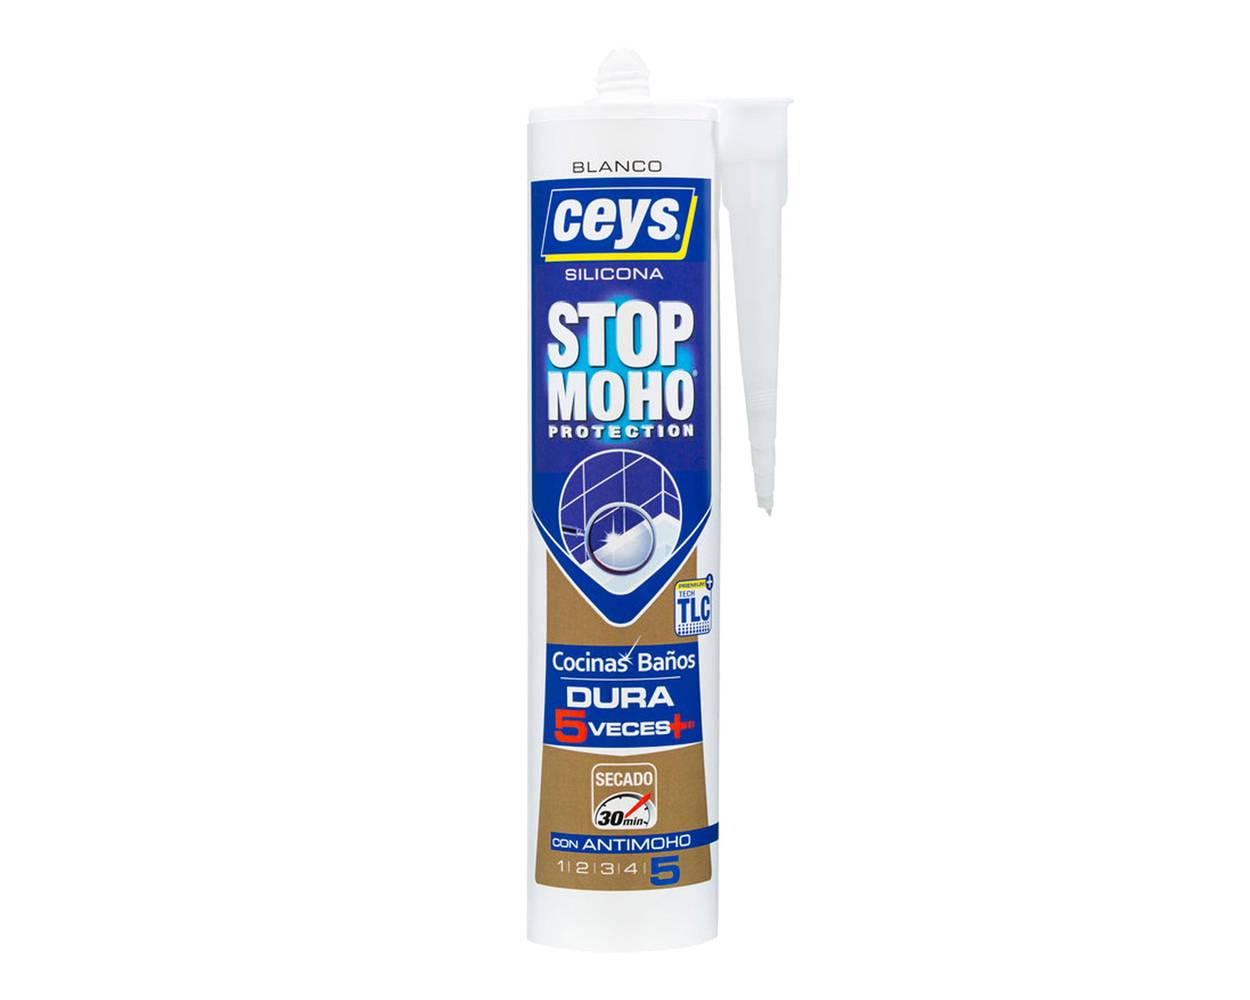 Ceys silicona stop moho blanco (280 ml)